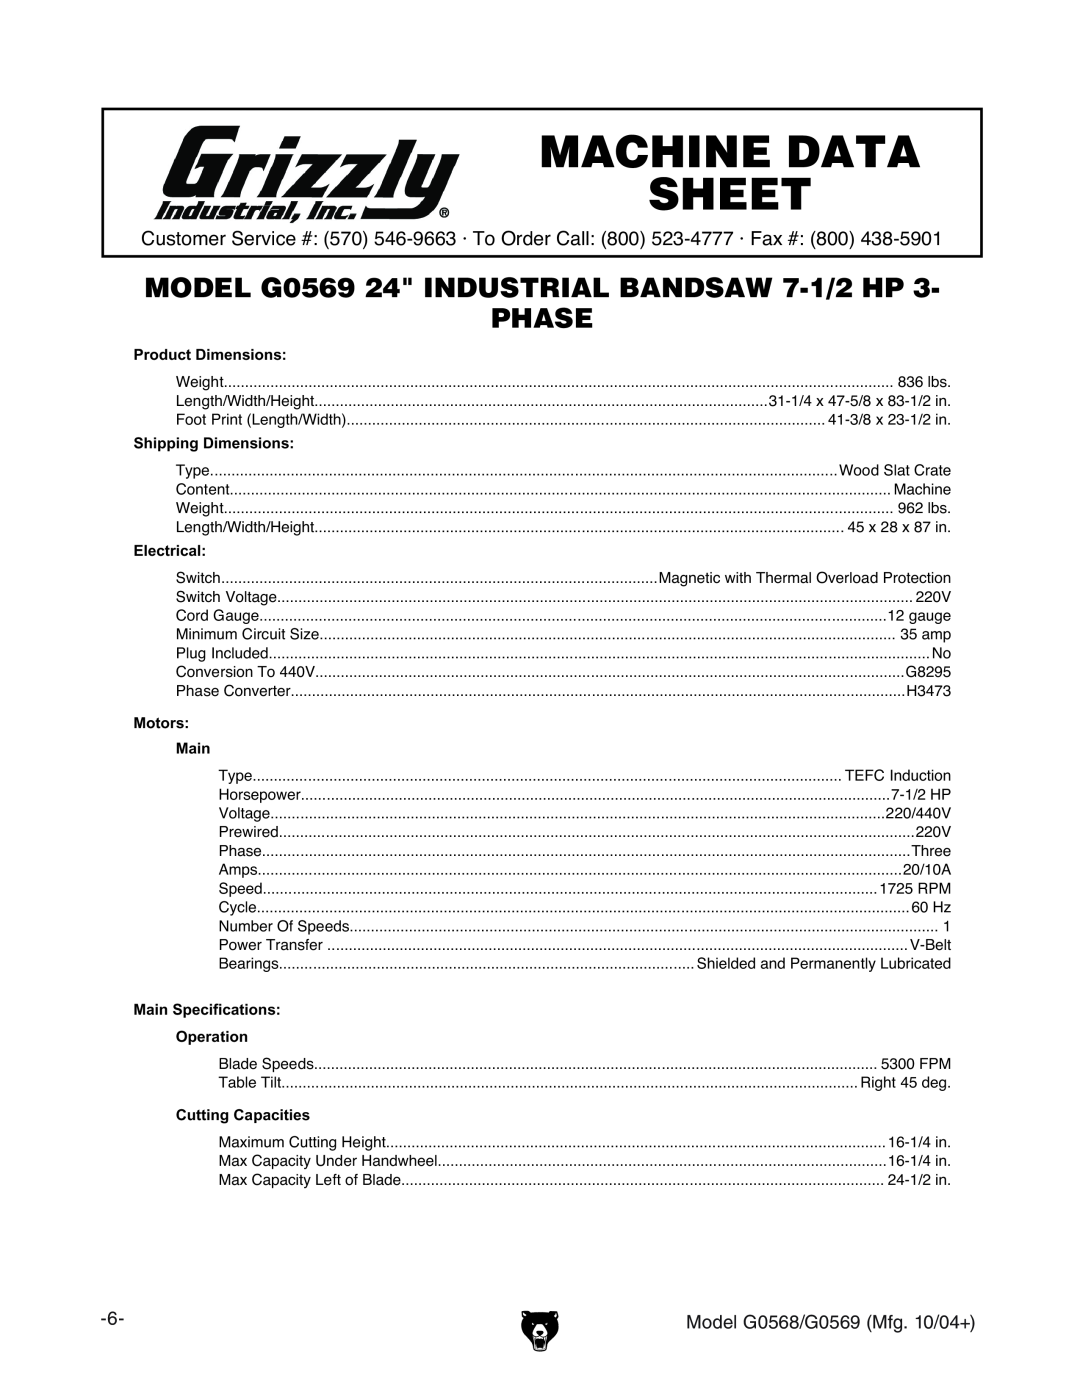 Grizzly MODEL G0569 24 INDUSTRIAL BANDSAW 7-1/2 HP PHASE, Machine Data Sheet, EgdYjXi9bZchdch, Heec\9bZchdch, Bdidgh 